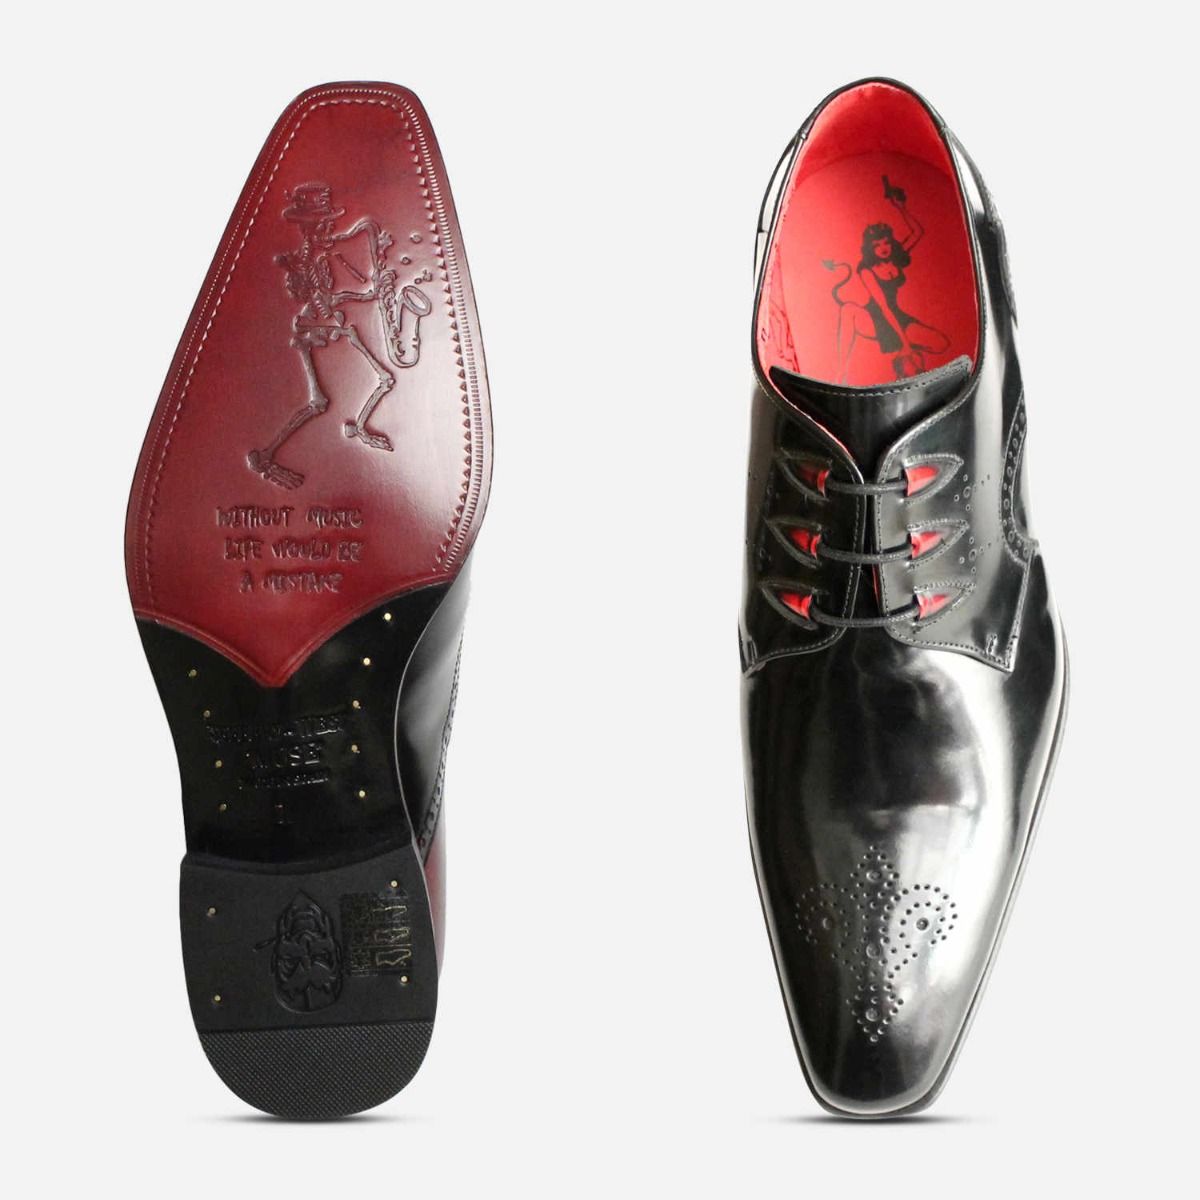 Jeffery West Jeffferey West Boots Size 7 EU 41 Black Leather Lined Men's Designer Shoes 